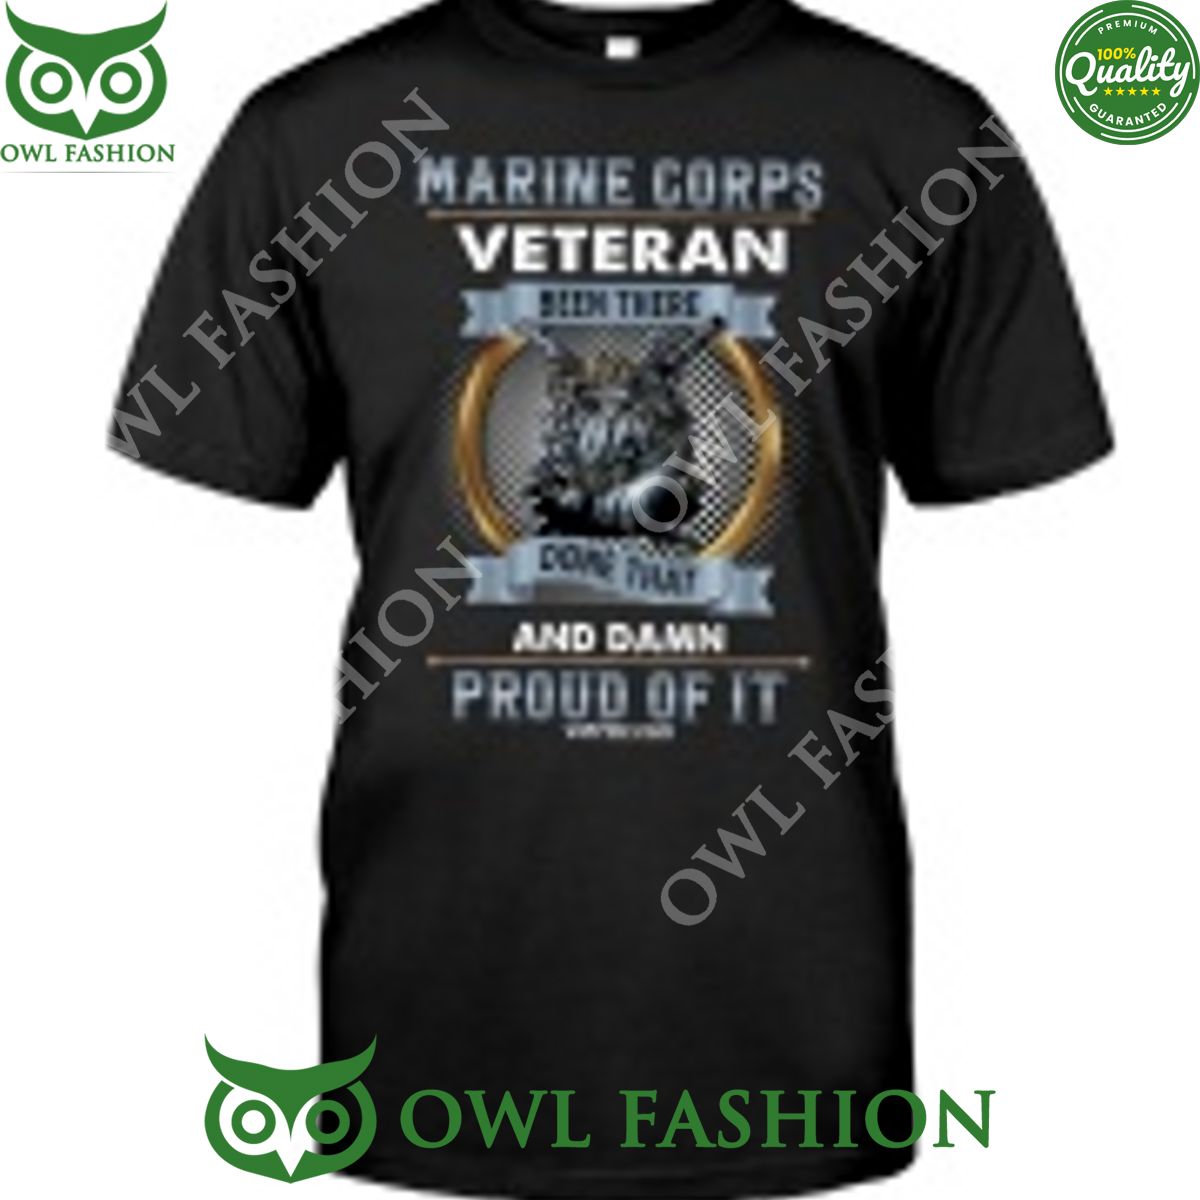 marine corps veteran been there done that damn proud of it t shirt trending 1 Lu2sU.jpg